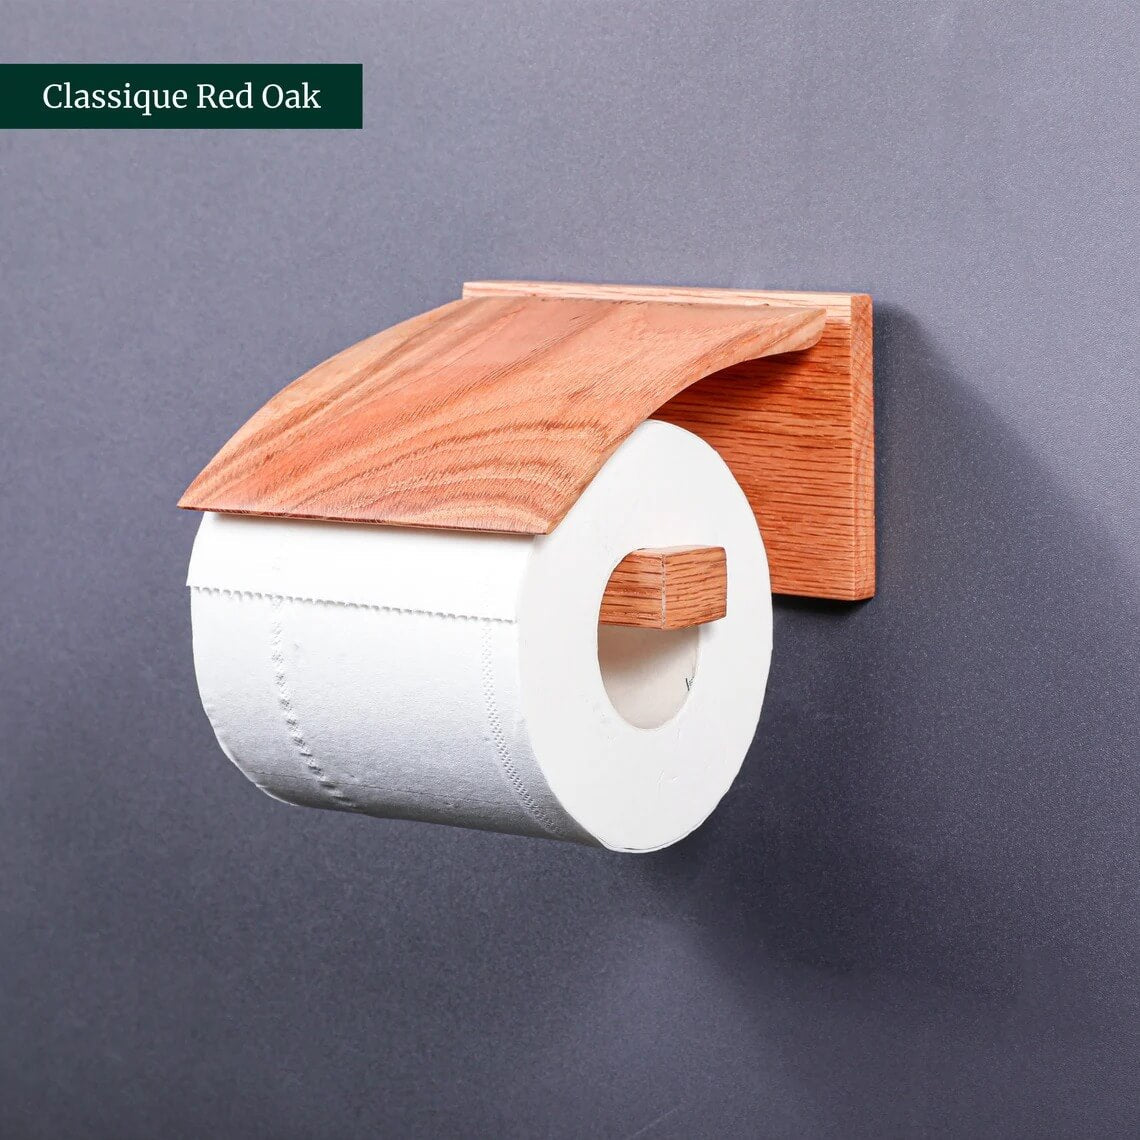 Classique-Toilet-Paper-Holder-Wooden-Shelf-Paper-Unroller